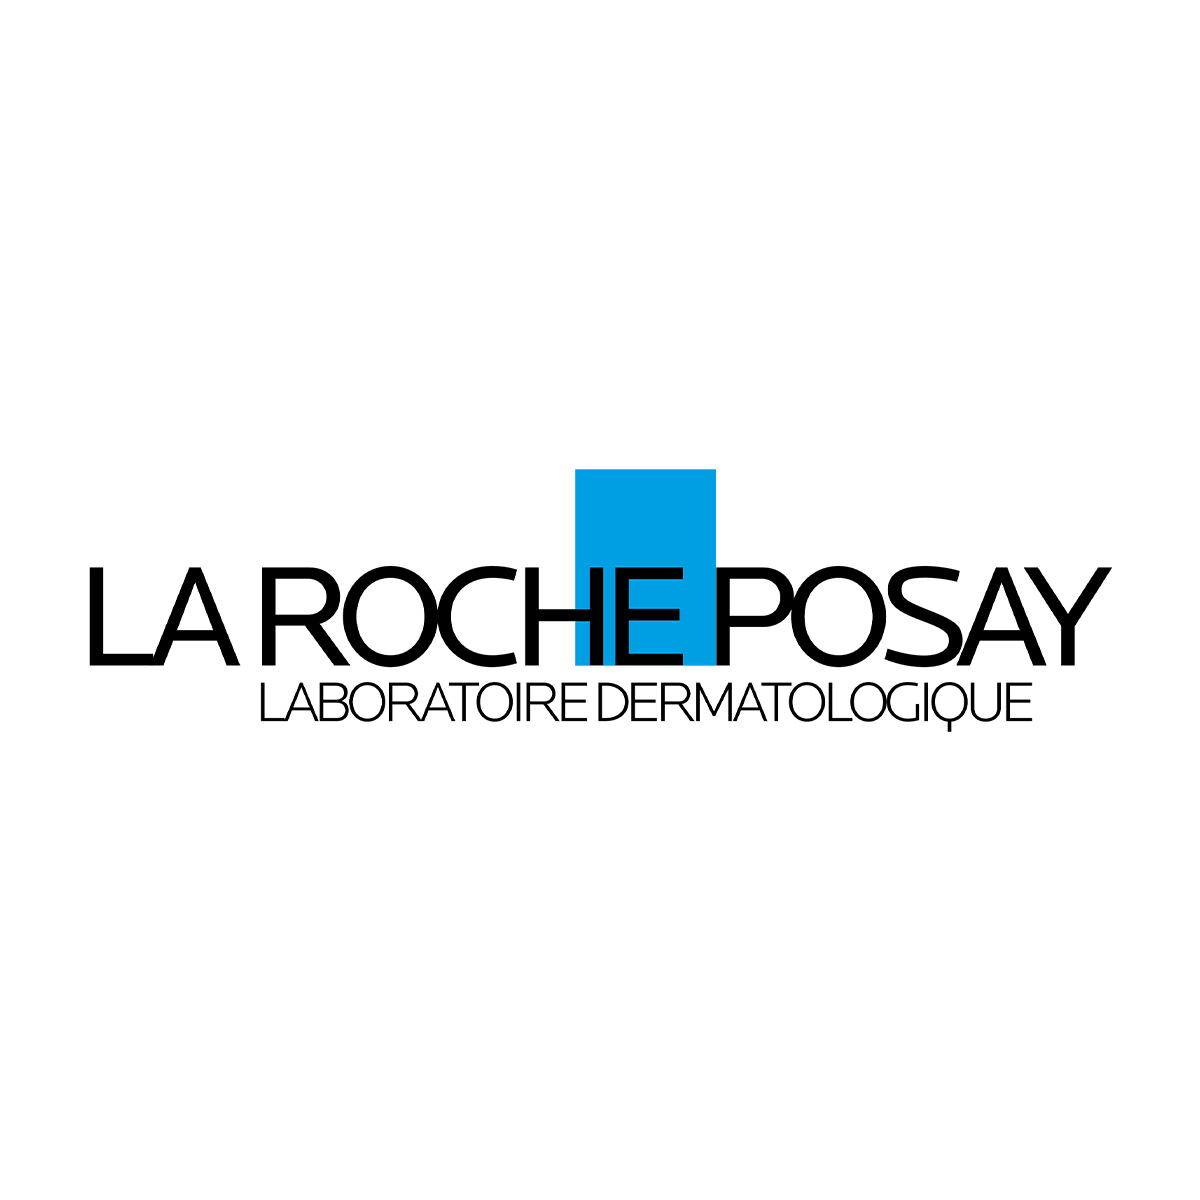 Laroche Posay